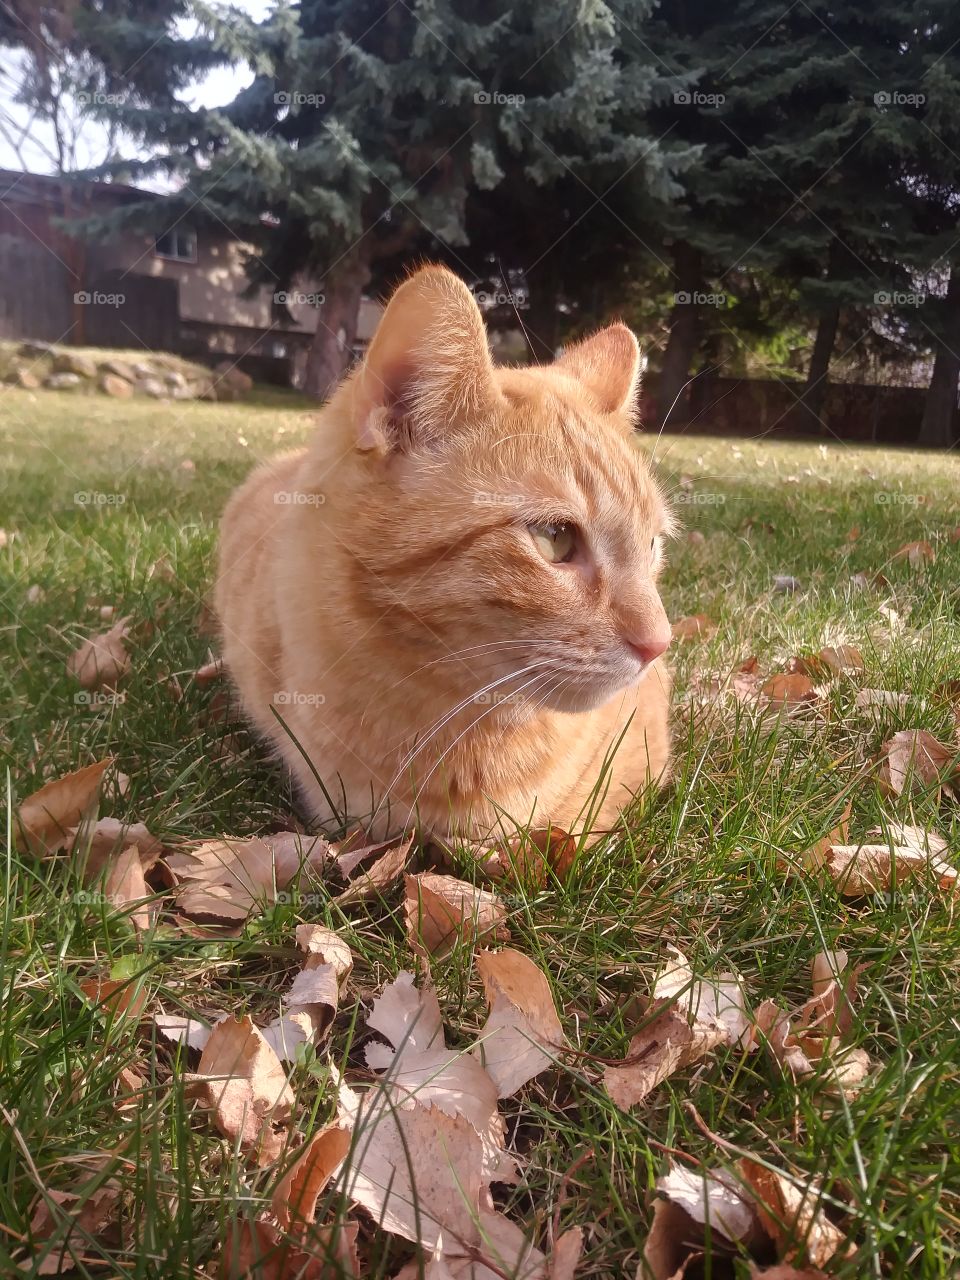 An orange cat named Butterbean in the grass 🐈